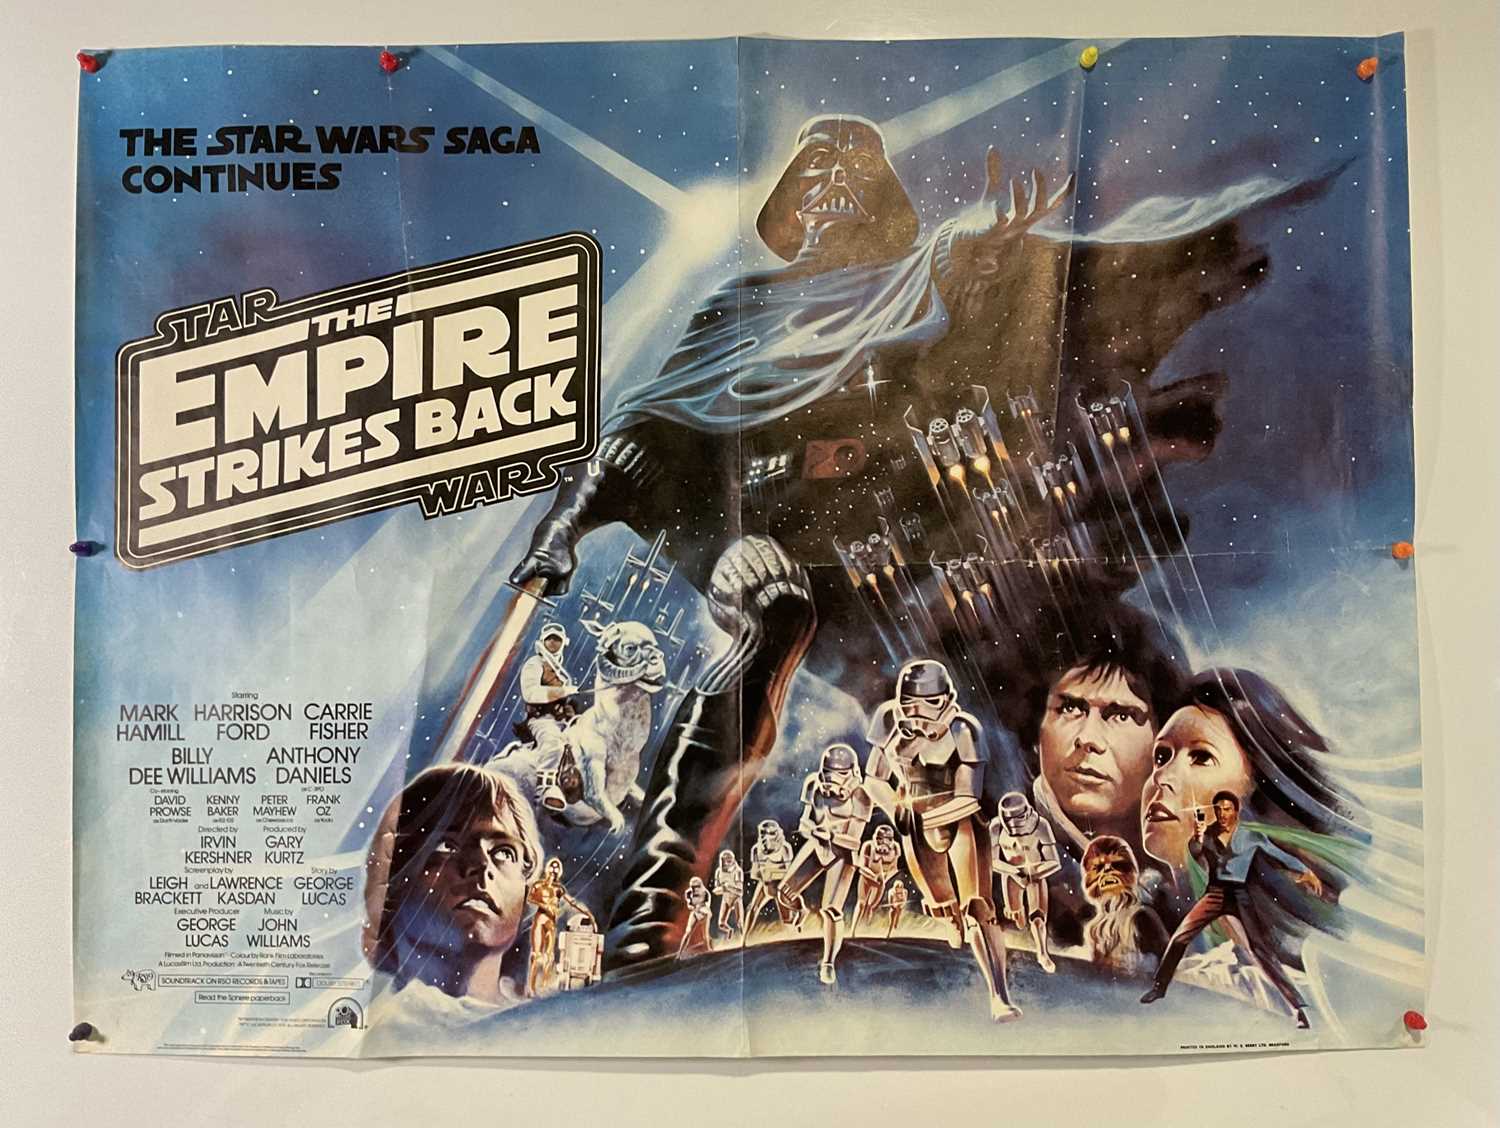 STAR WARS EPISODE IV: THE EMPIRE STRIKES BACK (1980) UK Quad film poster, Directed by Irvin